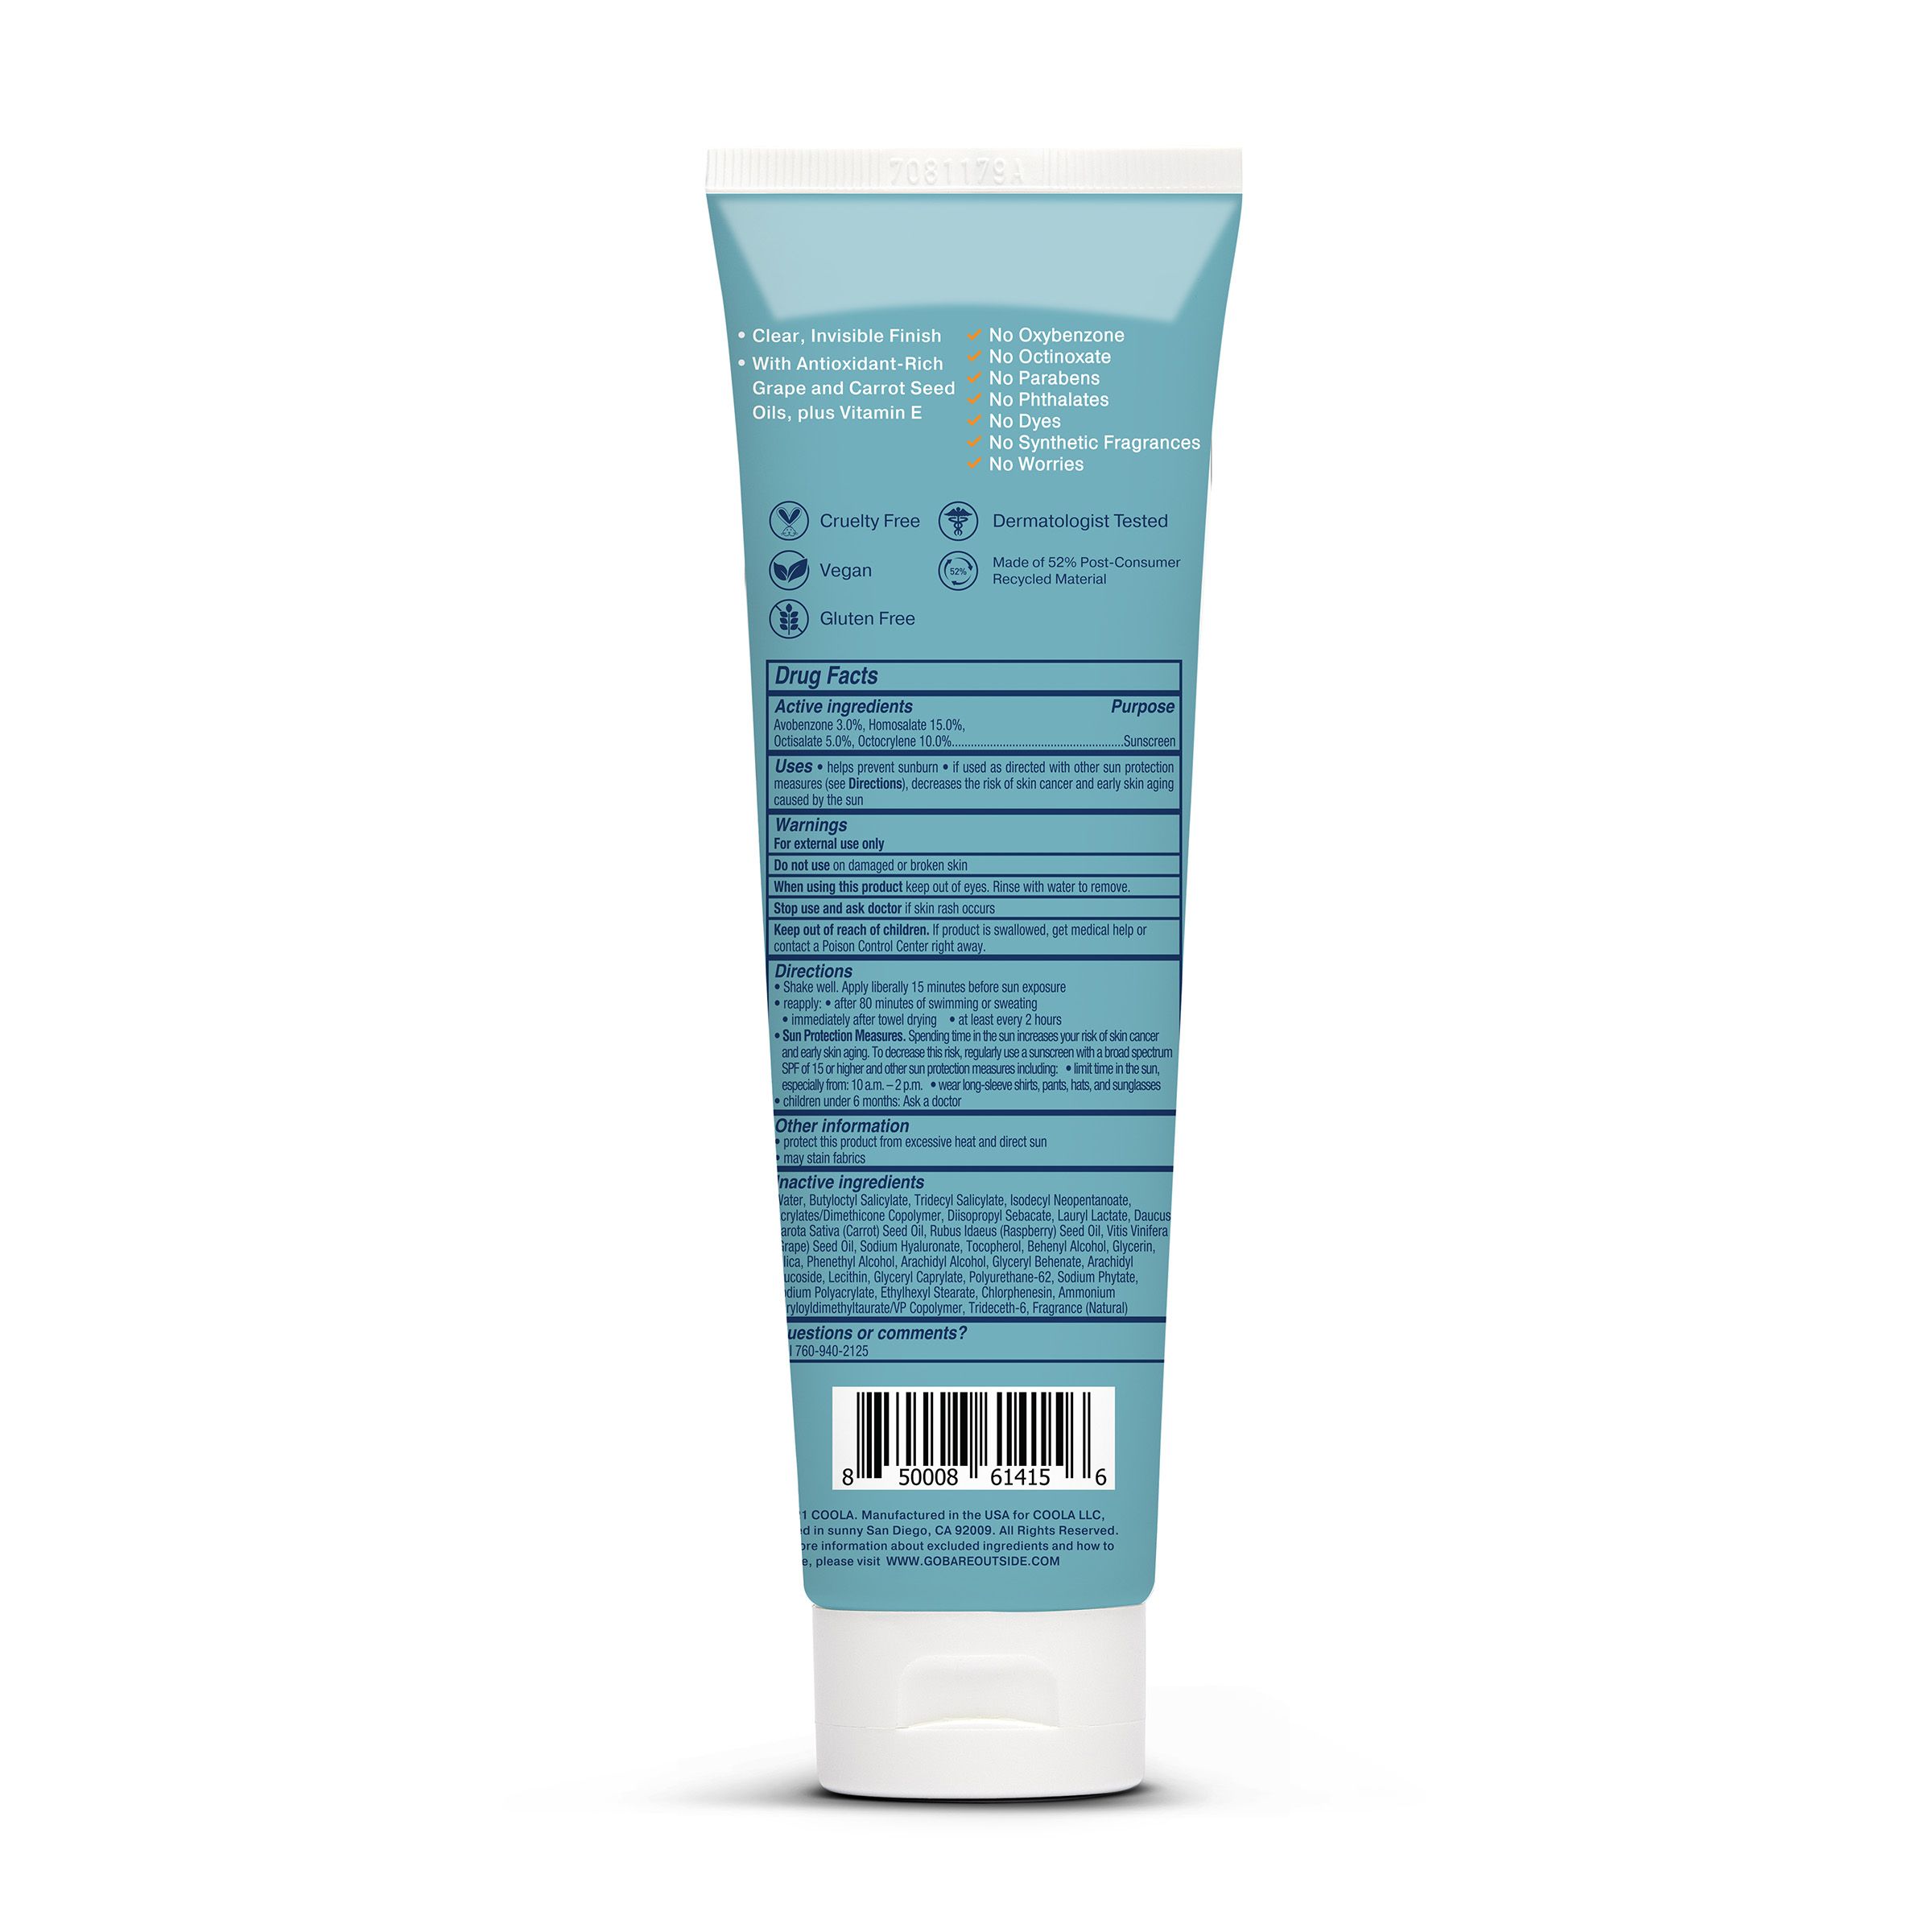 Bare Republic Clearscreen Sunscreen Body Lotion, SPF 100 - 5 fl oz